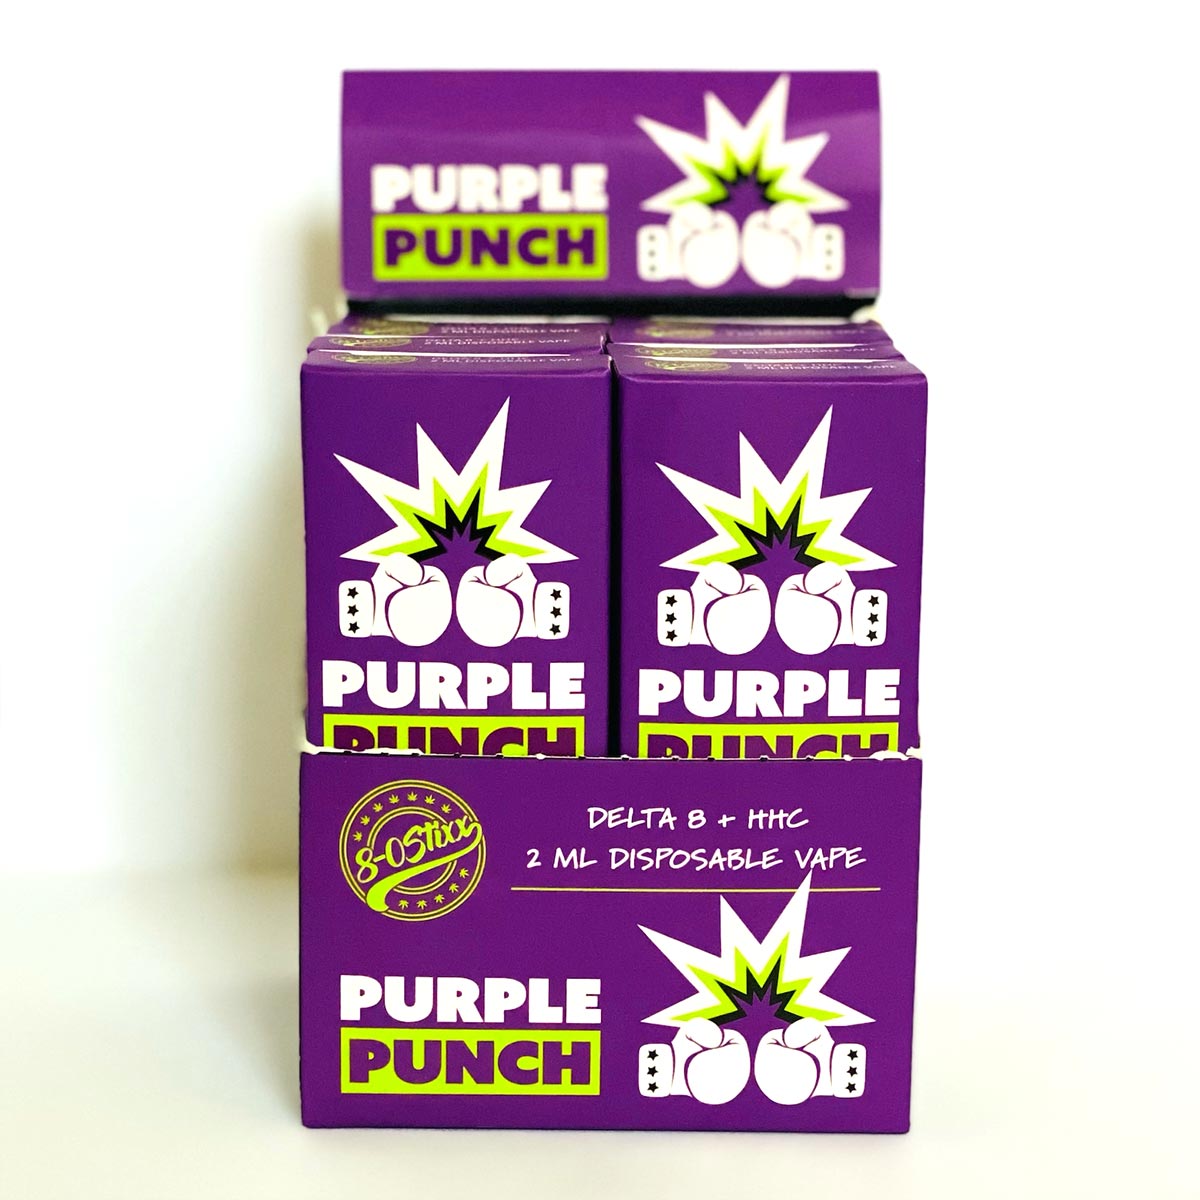 80 stixx Delta 8 HHC 2 ml Disposable Vape Purple Punch 2